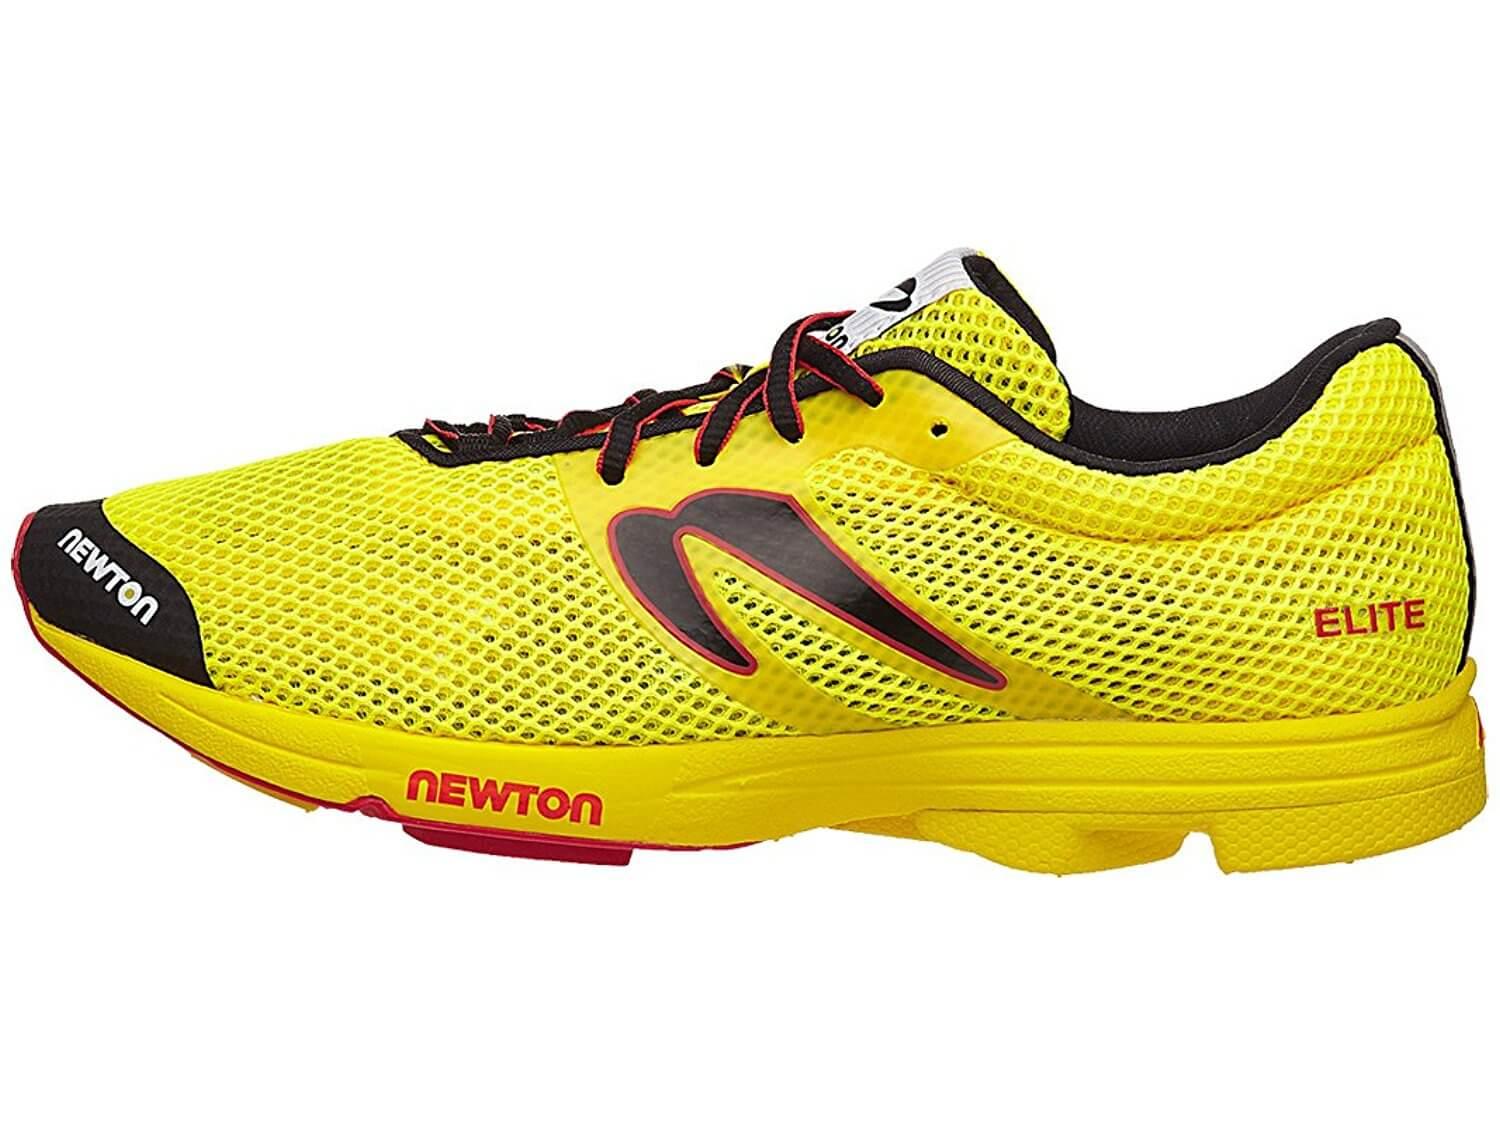 the Newton Distance Elite is a sleek, lightweight, minimalist running shoe that helps runners obtain their racing goals